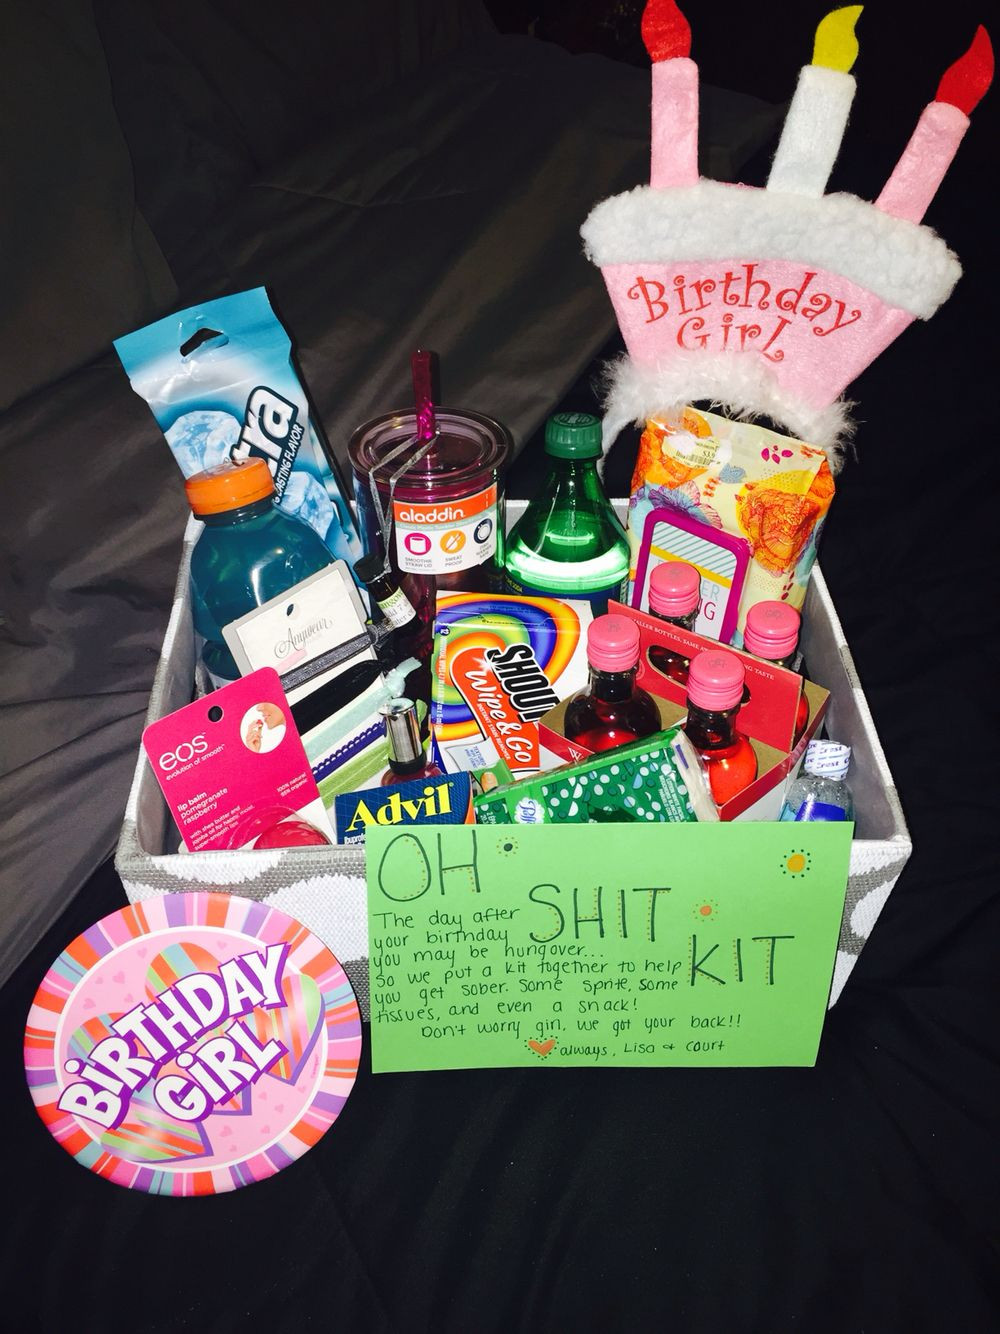 Bff Birthday Gift Ideas
 Bestfriend s 21st birthday "Oh Shit Kit"